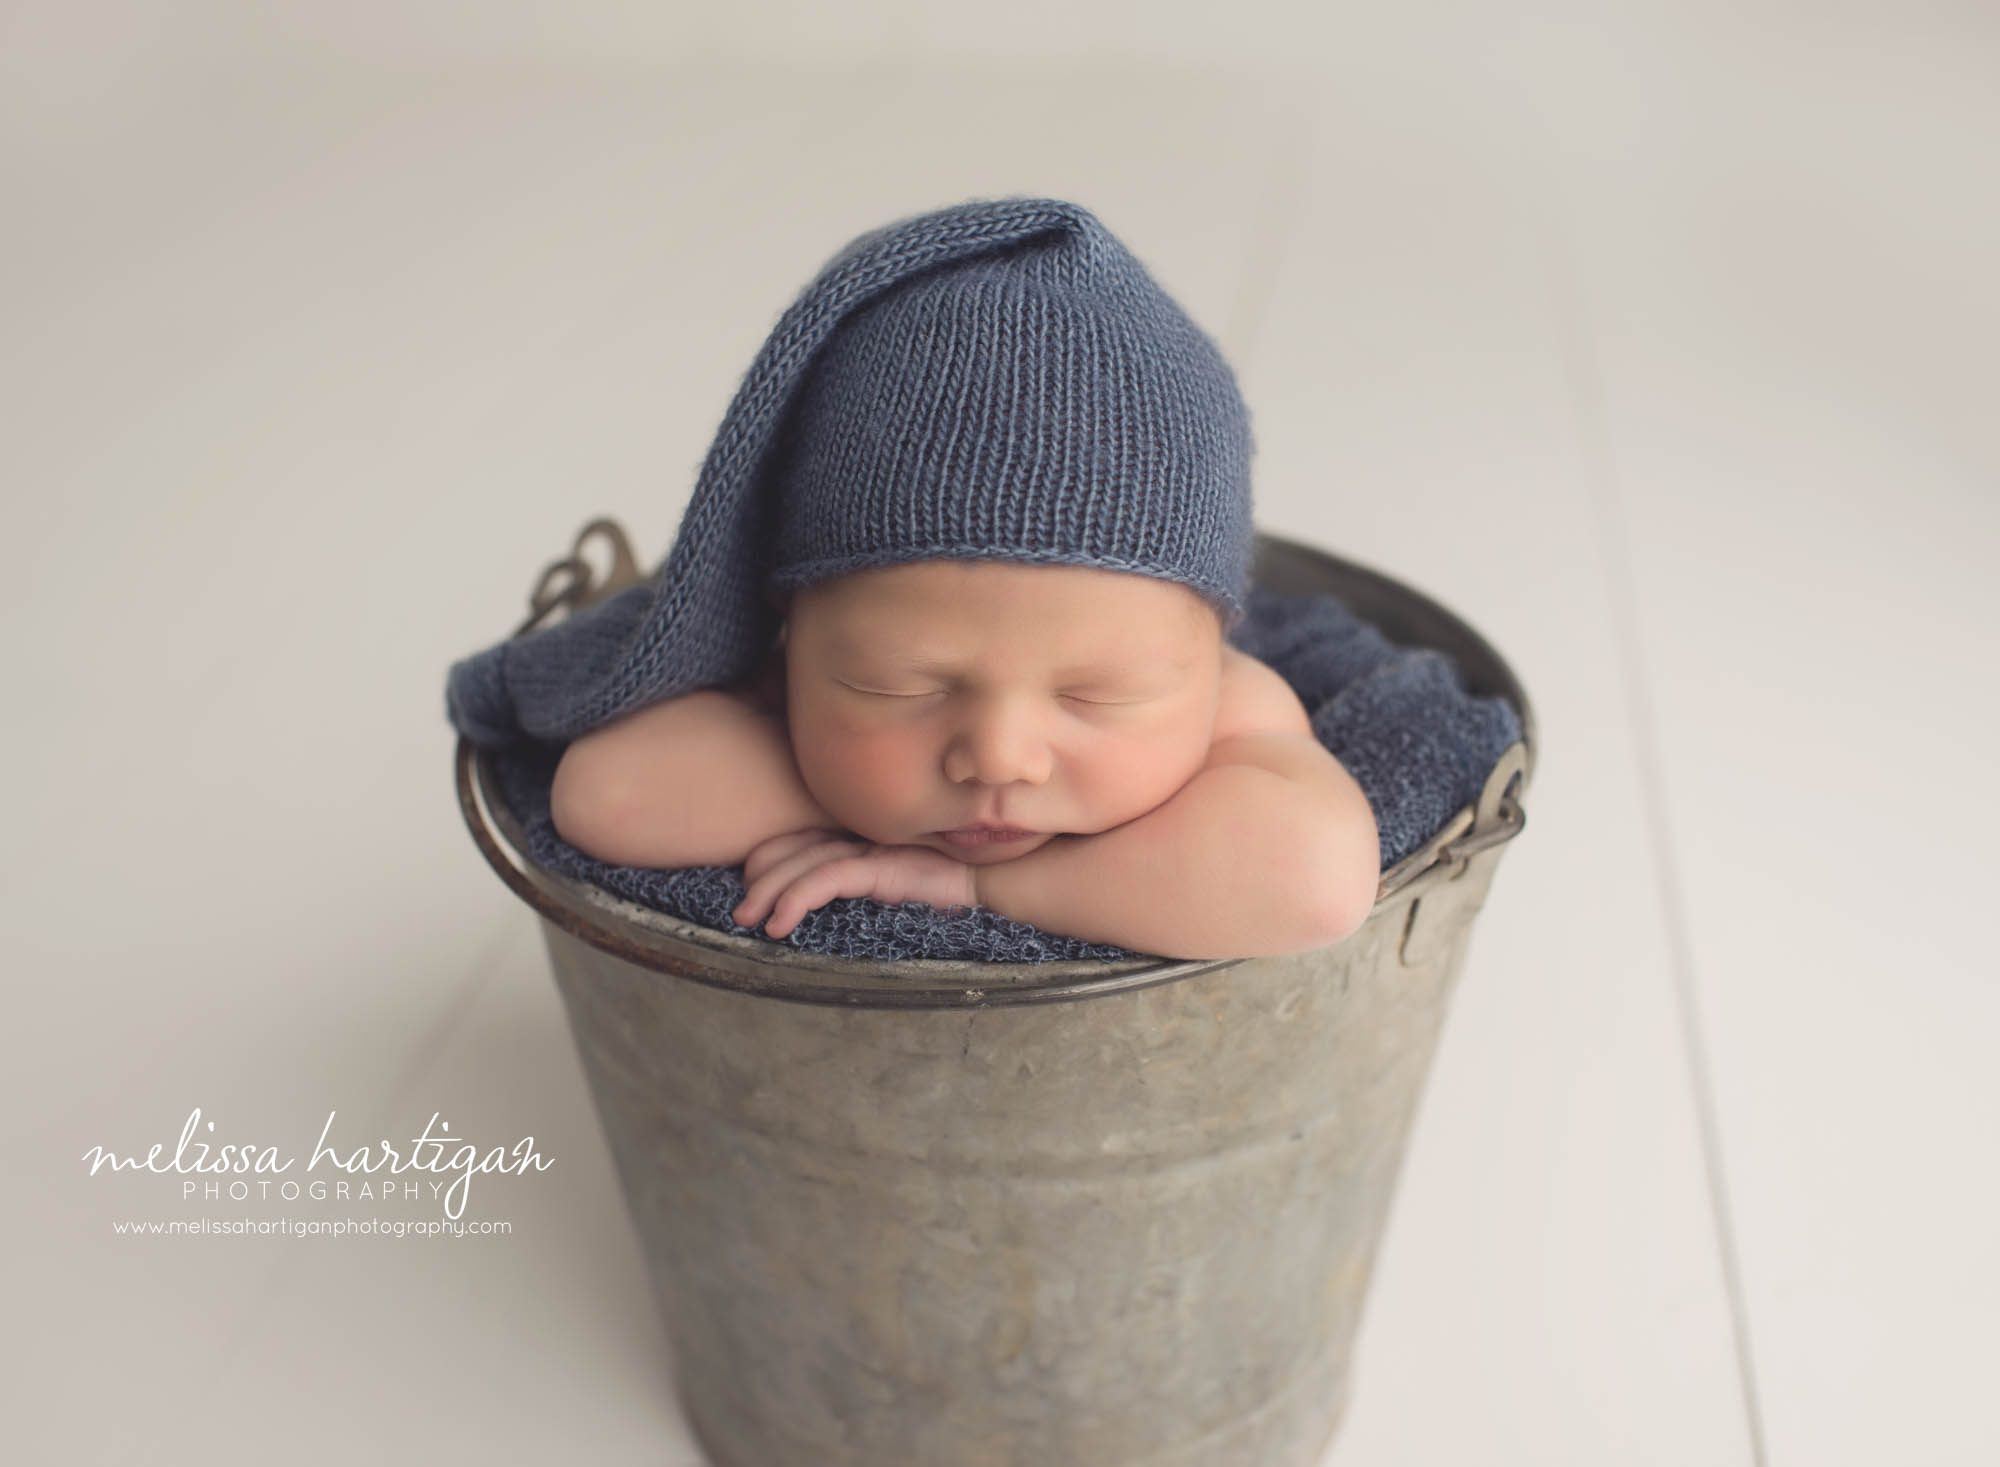 Melissa Hartigan Photography CT Newborn Photographer Braeden Newborn Session baby boy sleeping in metal bucket wearing blue knit hat and blue blanket